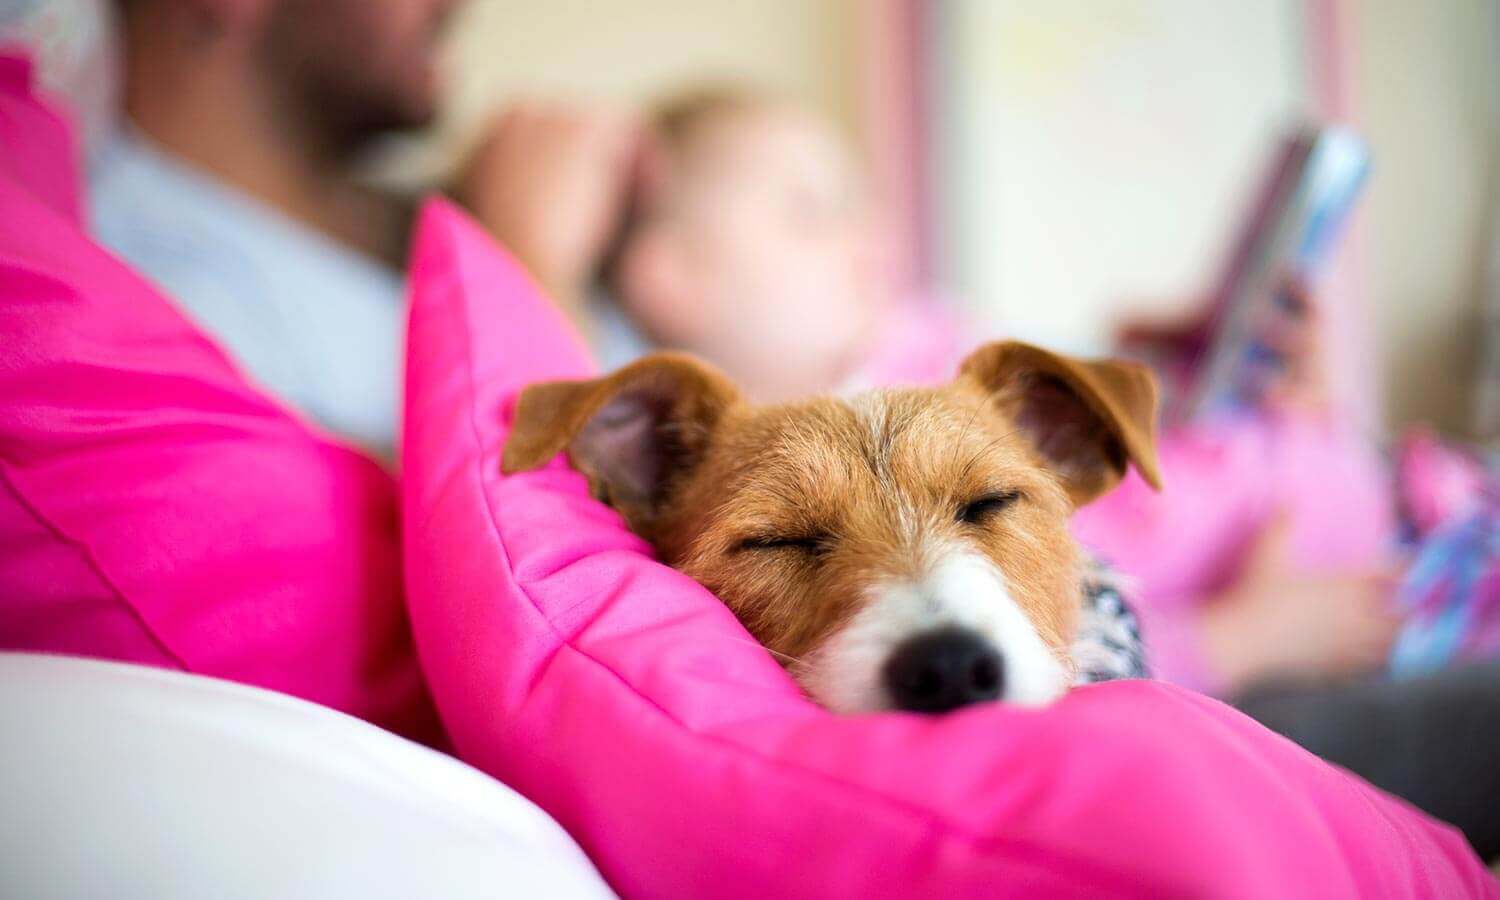 A sleeping dog on a pillow